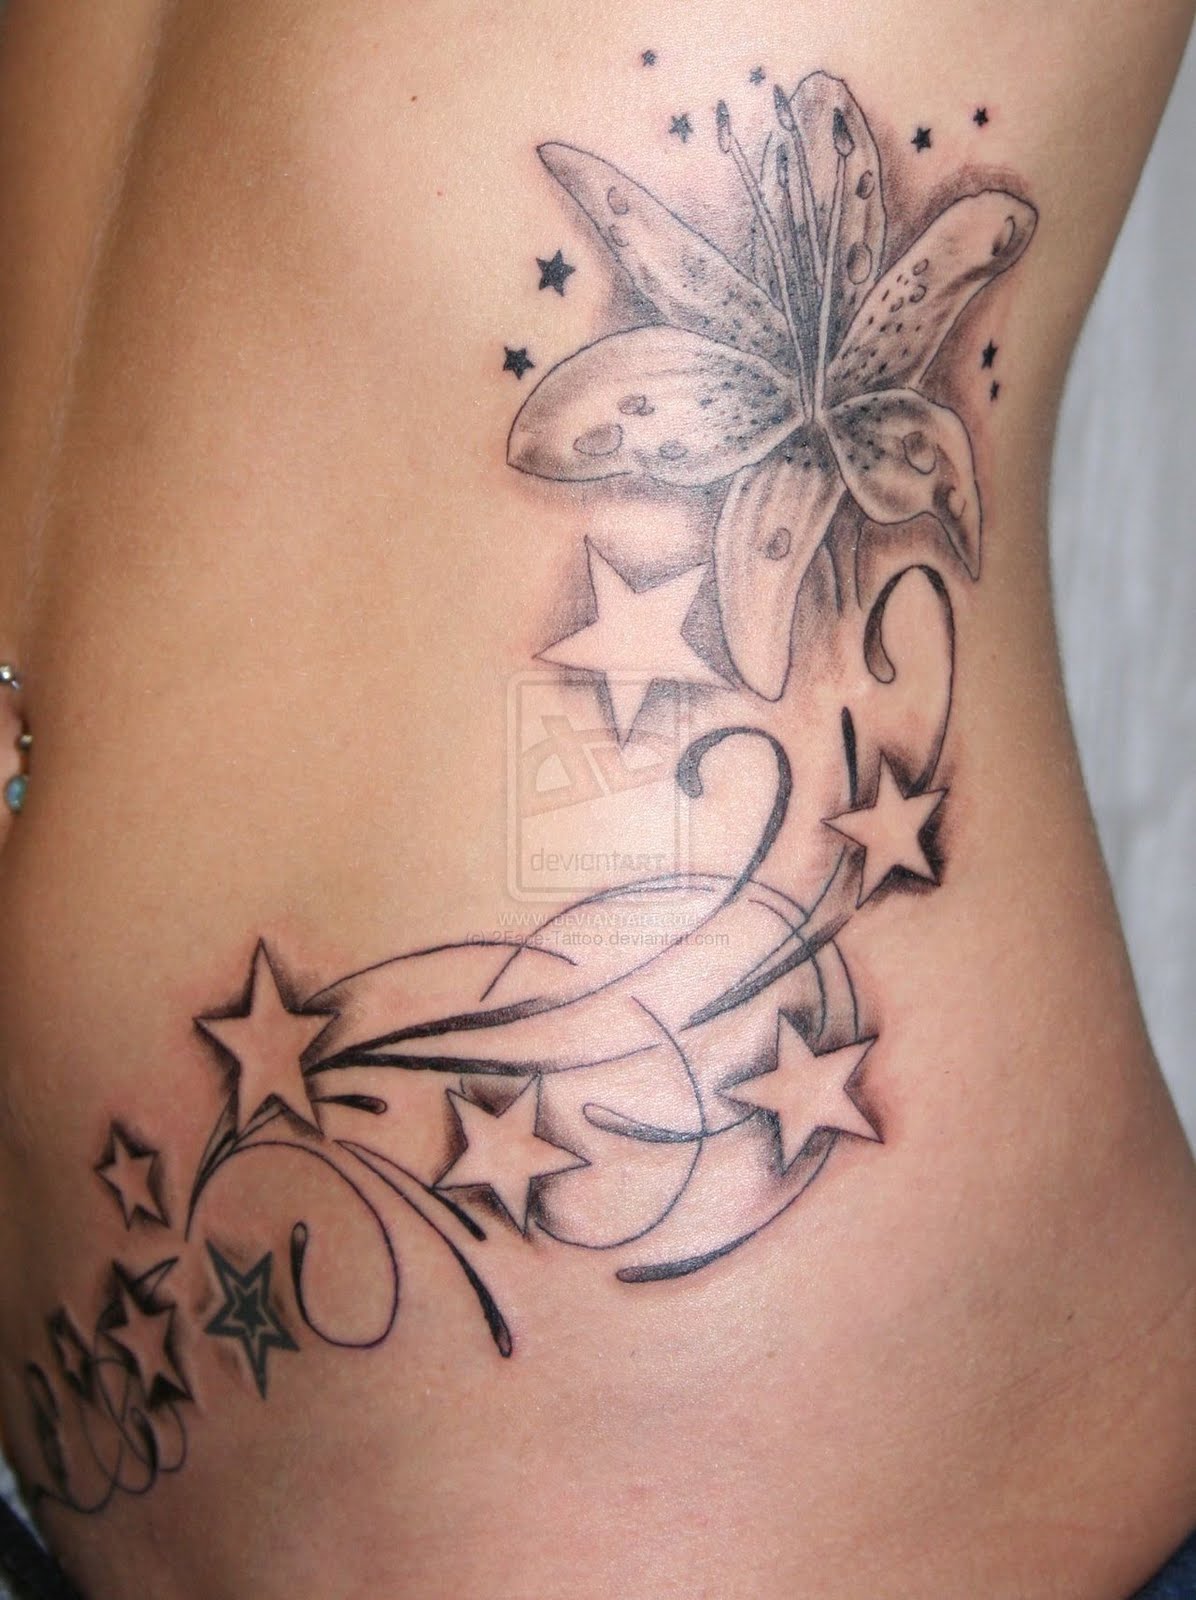 http://2.bp.blogspot.com/-SSqlm4gydS8/TwsCdg_-yEI/AAAAAAAADGE/bBb_pAueEMQ/s1600/Latest-Tattoos-on-Side-of-Ribs-for-College-Girls.jpg